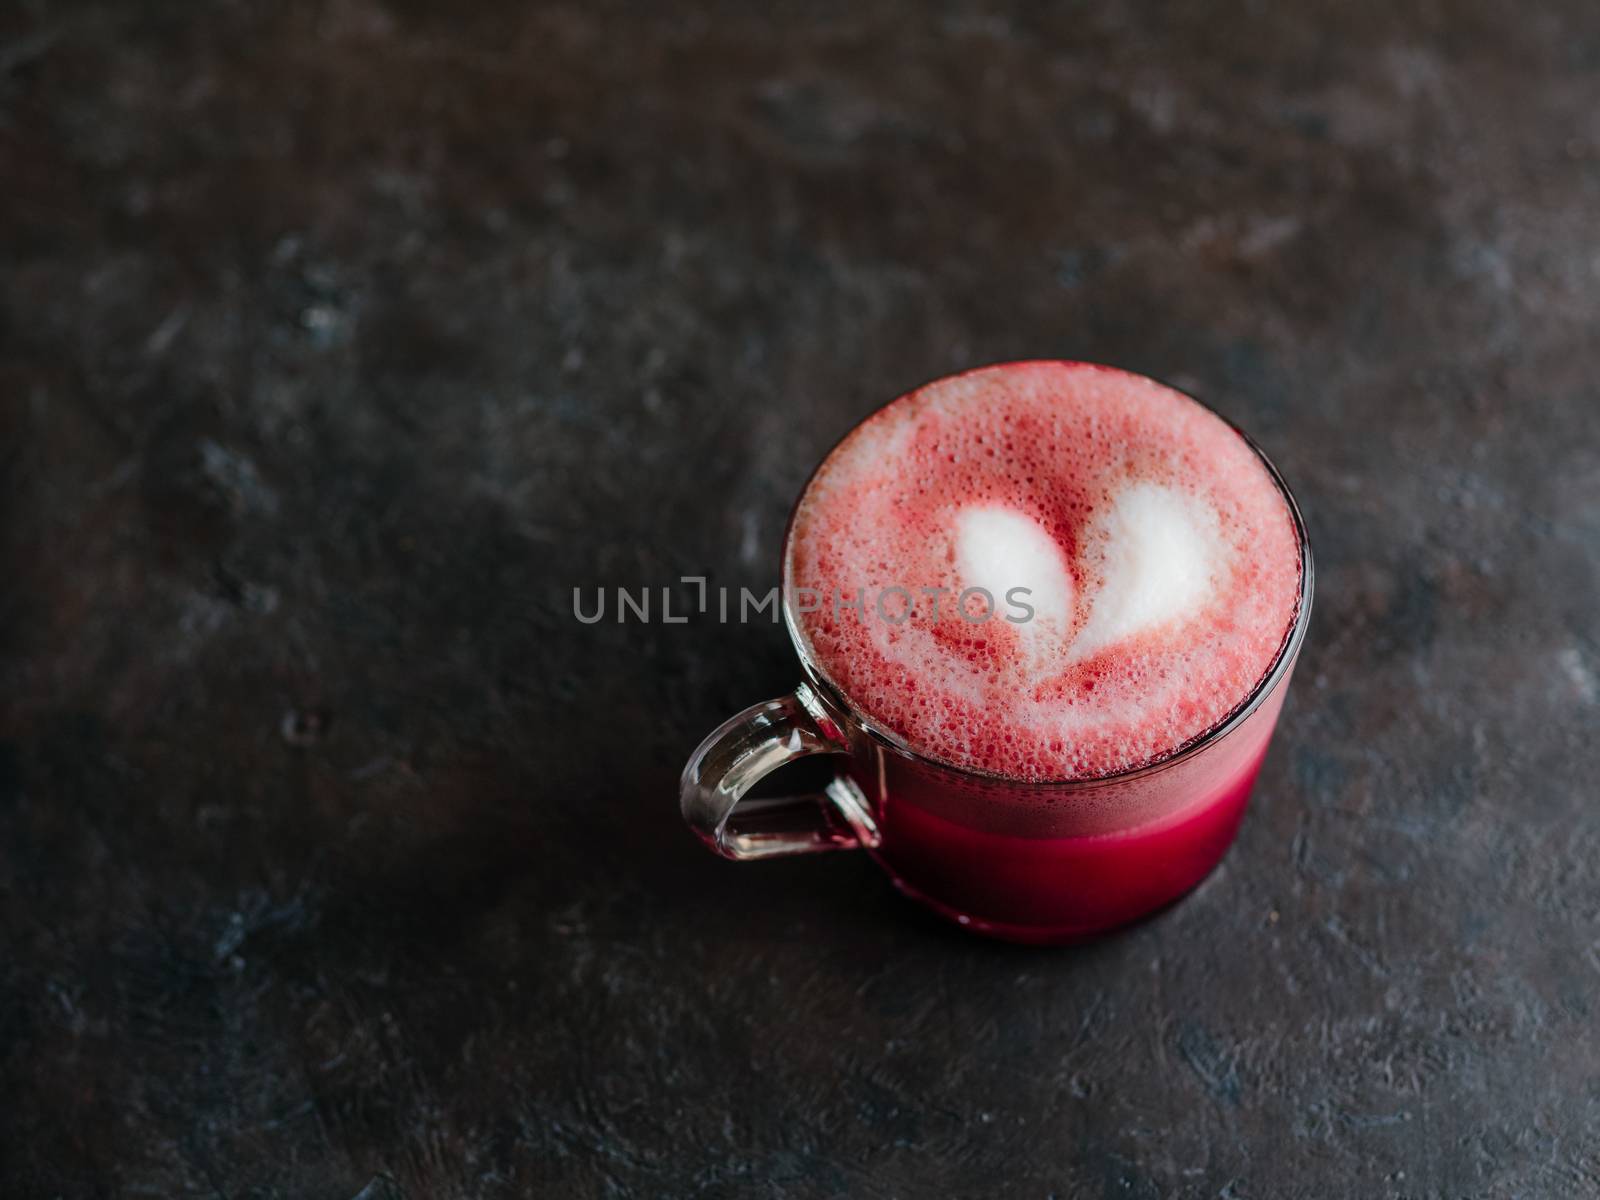 Pink beetroot latte or red velvet latte by fascinadora